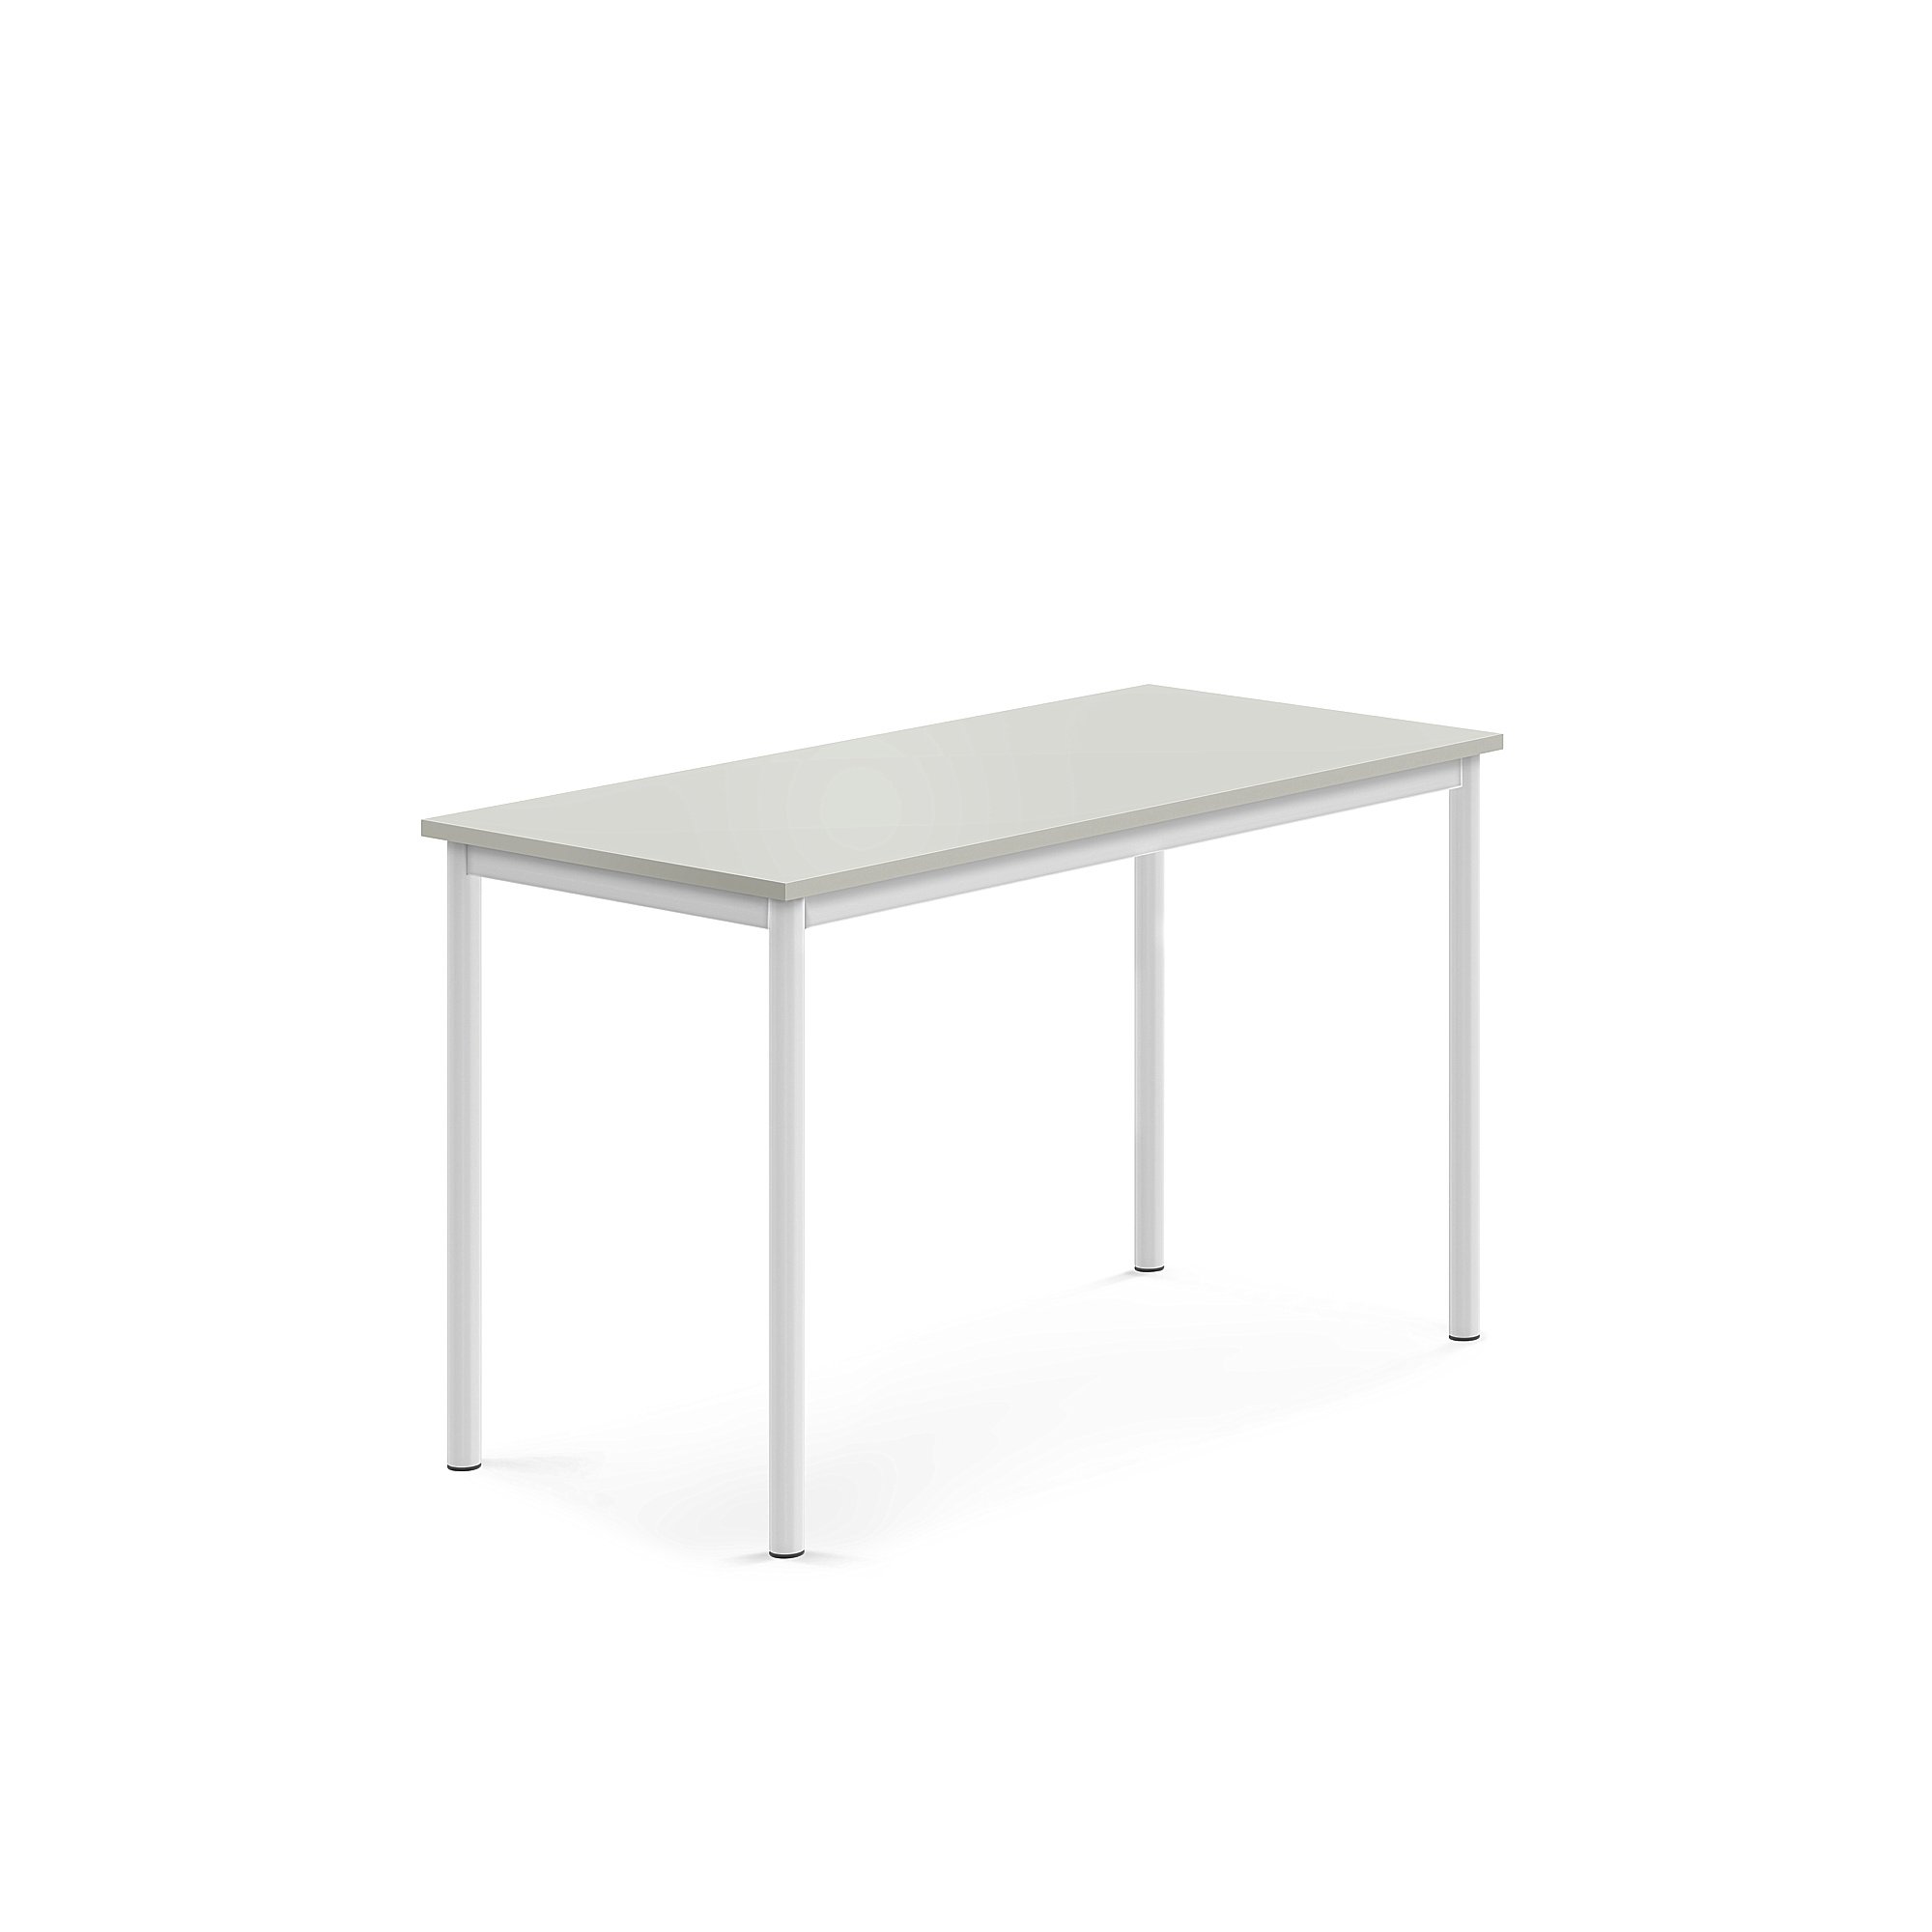 Stůl SONITUS, 1200x600x720 mm, bílé nohy, HPL deska tlumící hluk, šedá